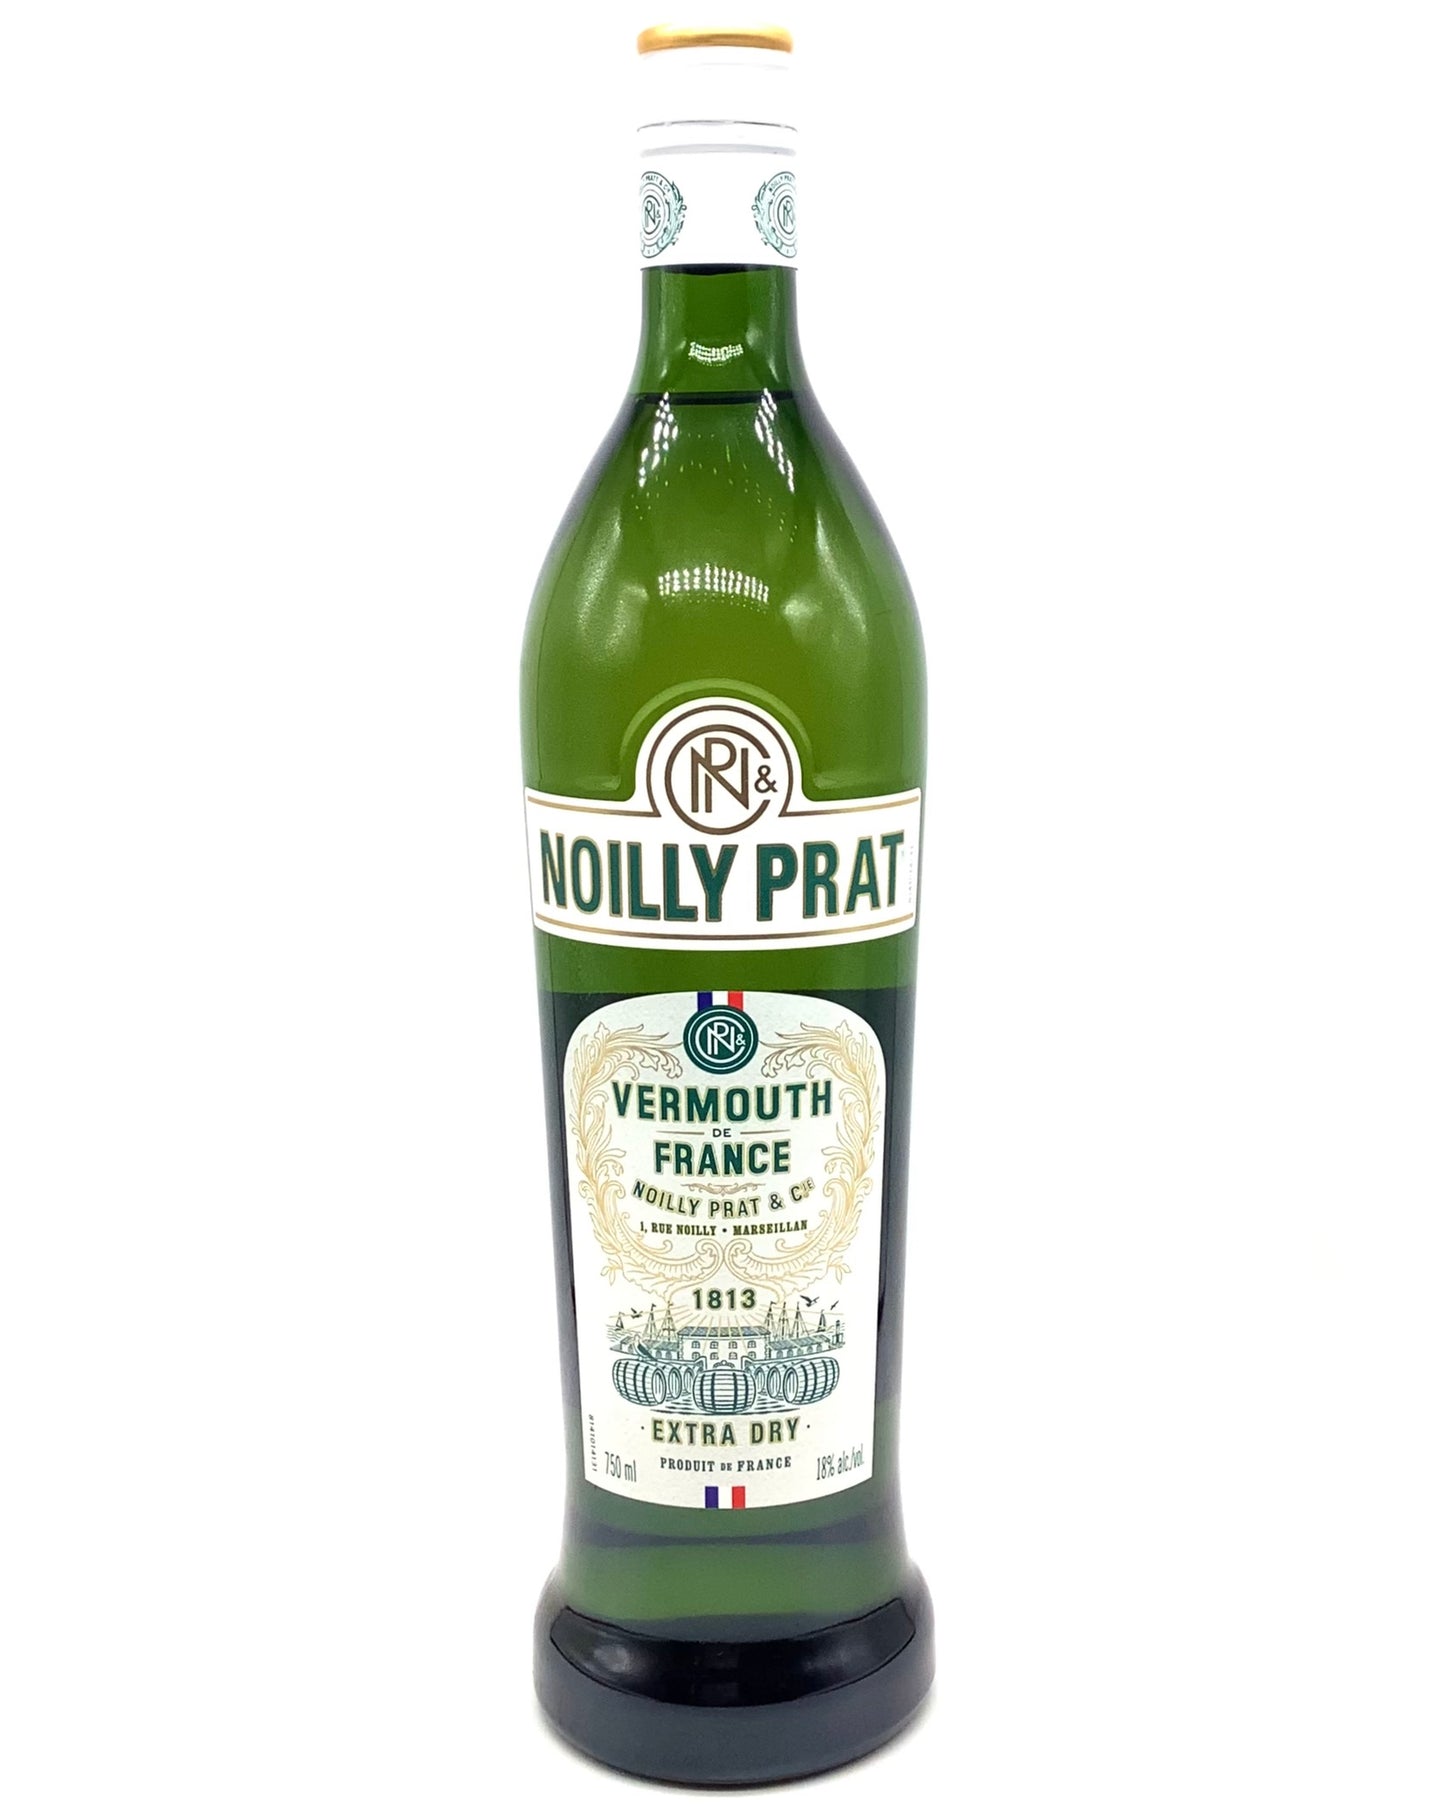 Noilly Prat, Vermouth de France "Extra Dry" 750ml